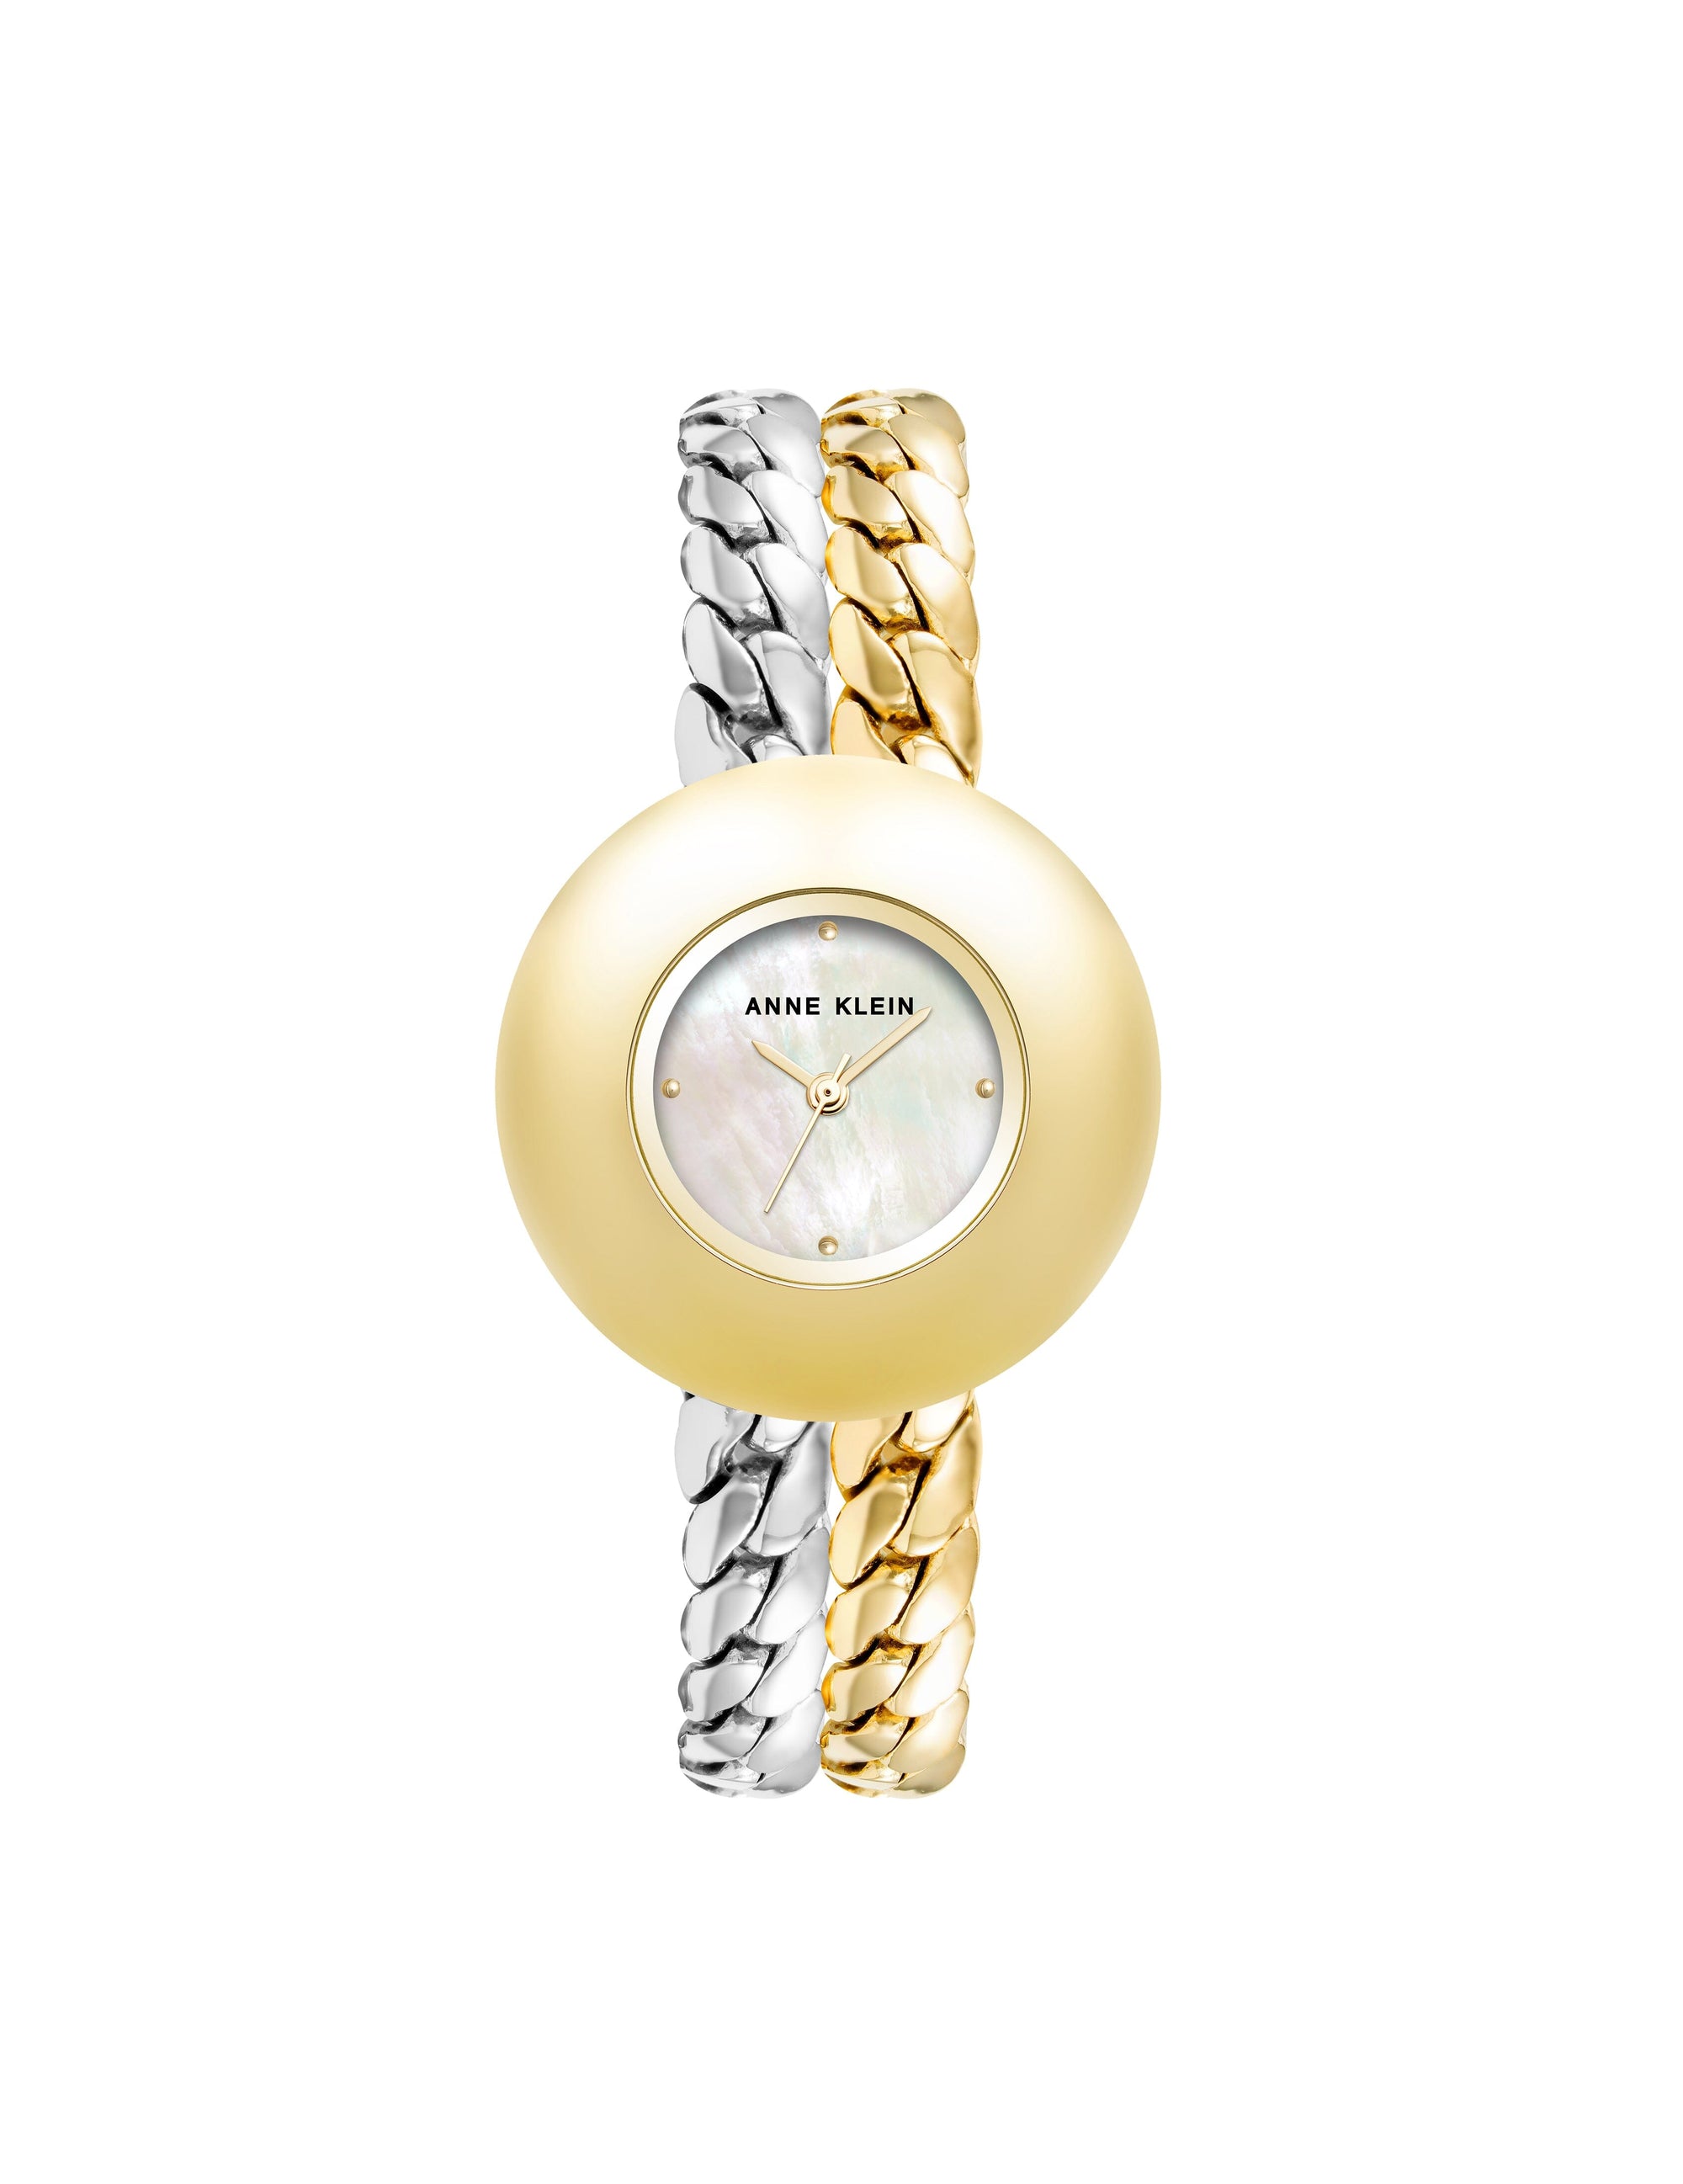 Anne Klein Silver-Tone/ Gold-Tone Double Chain Bracelet Watch